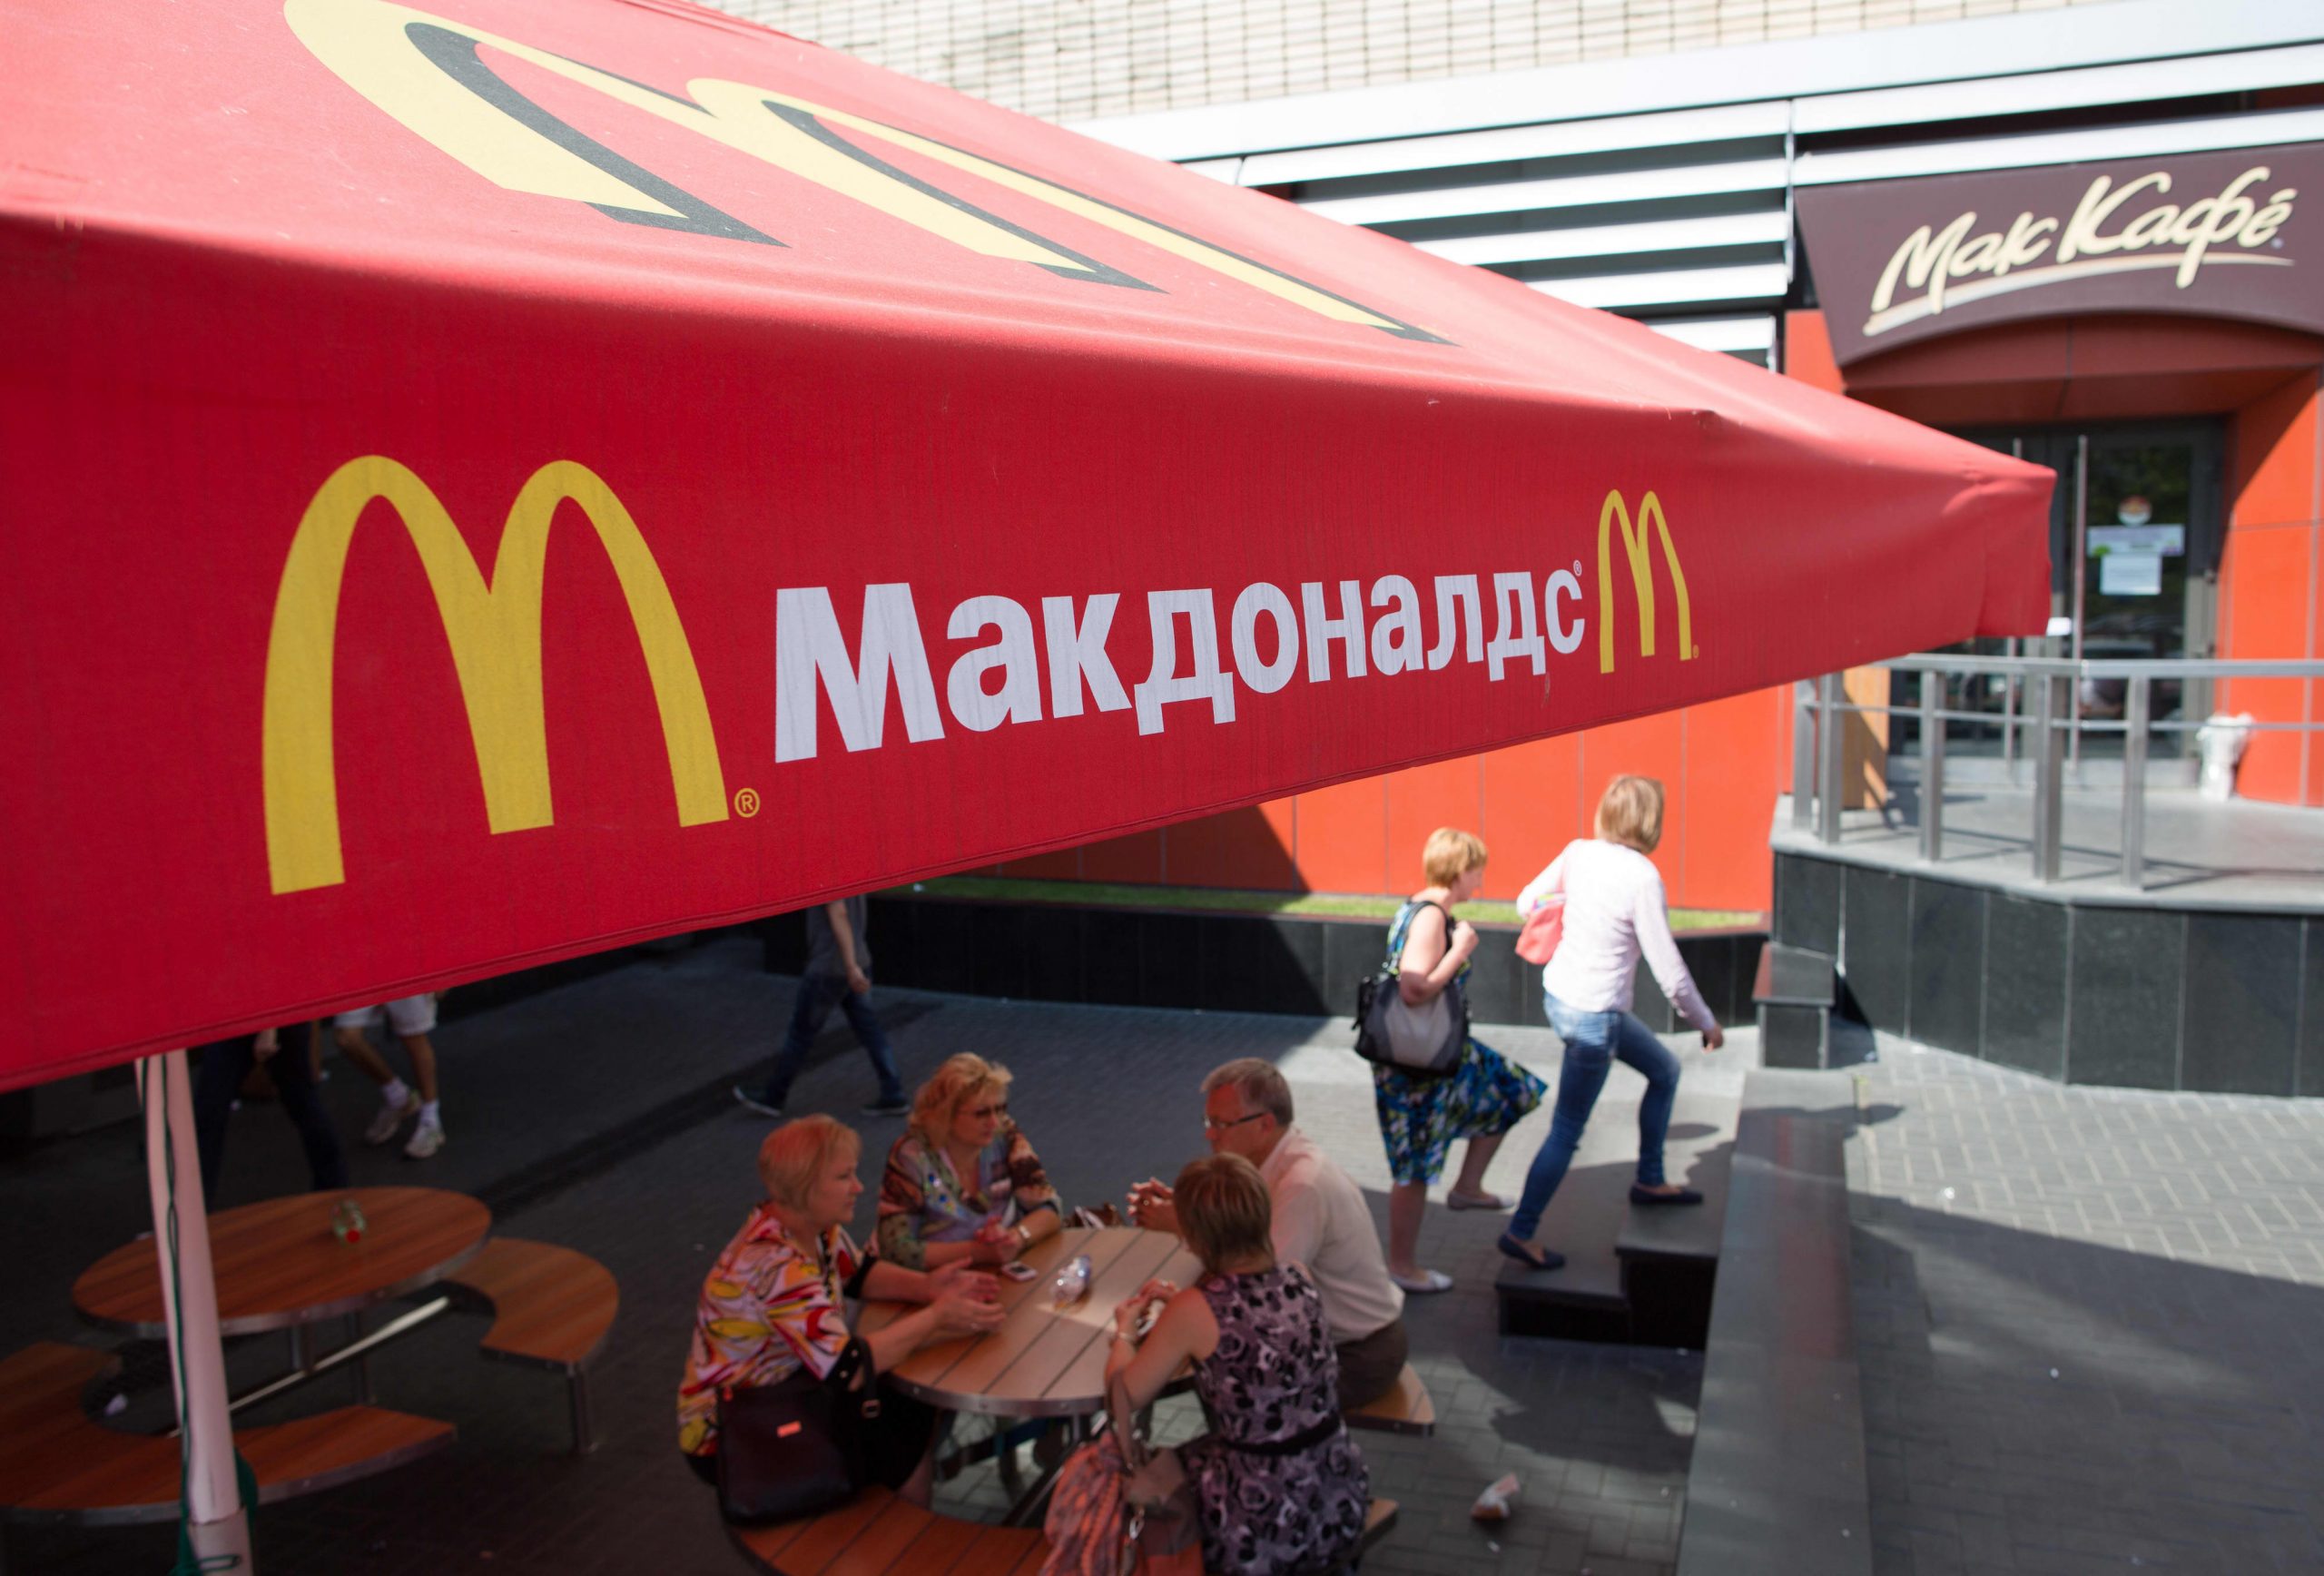 McDonald’s temporarily closes Russia restaurants amid Ukraine war